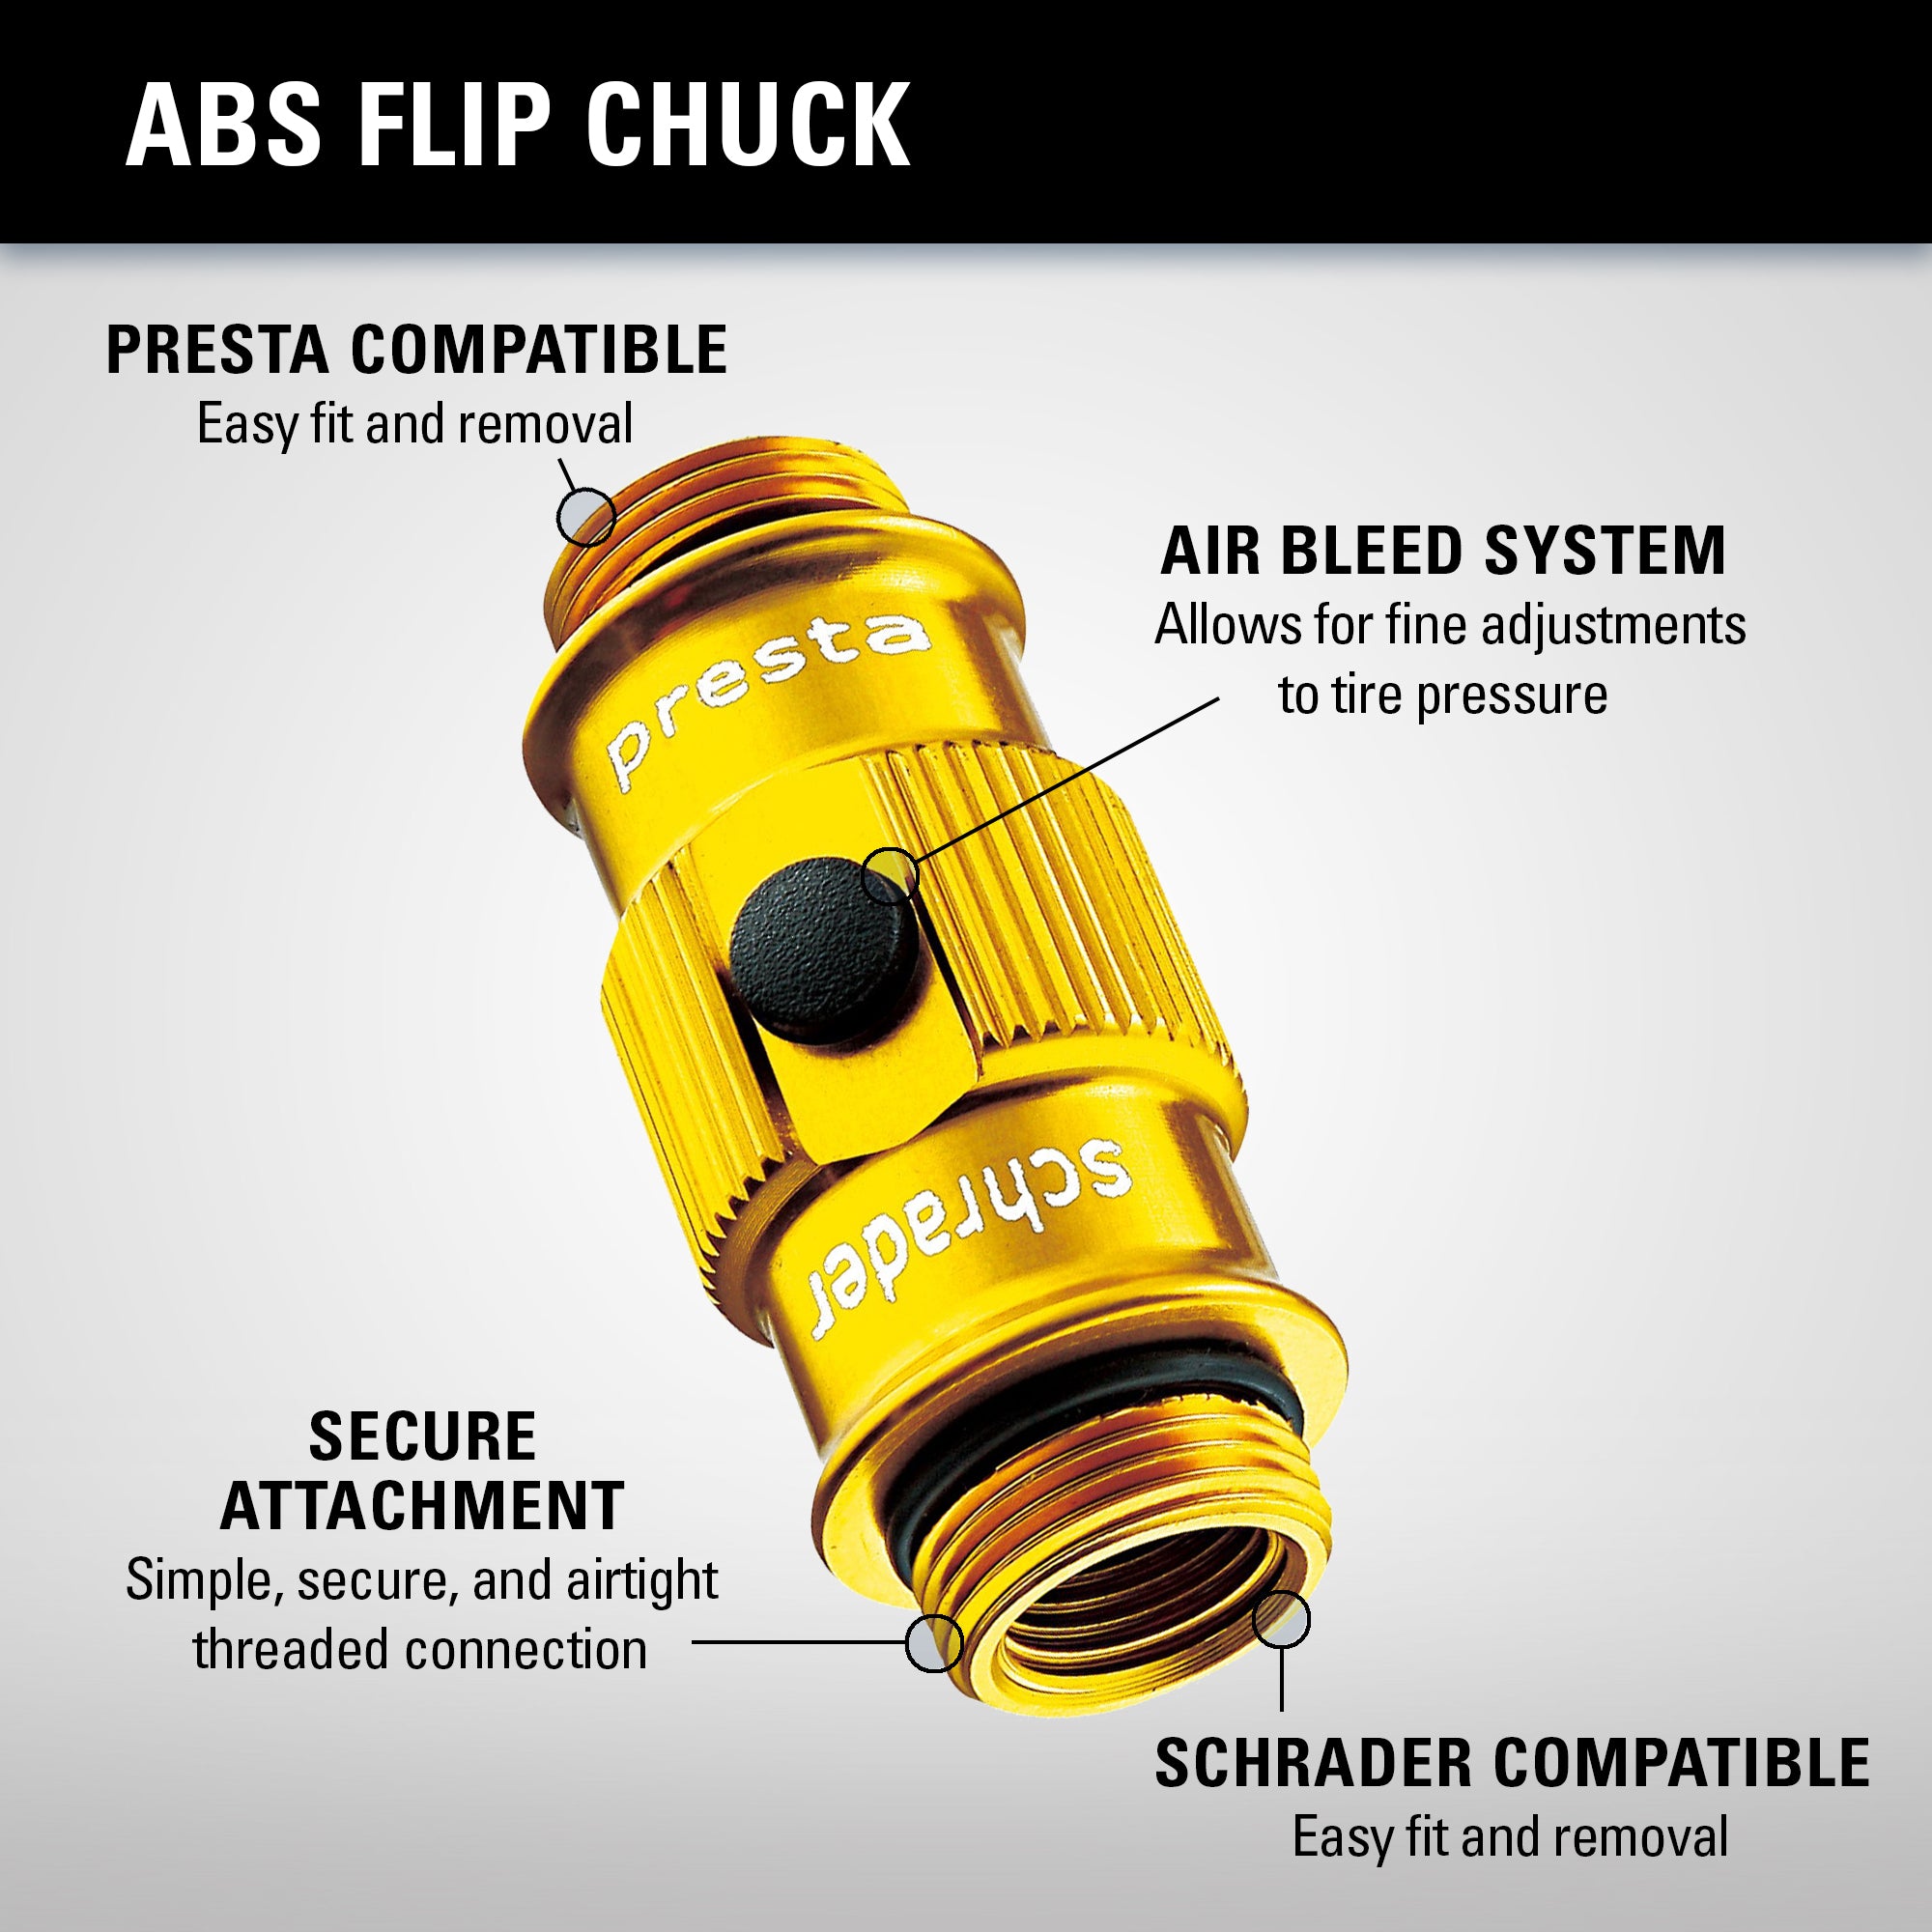 ABS FLIP CHUCK - STD